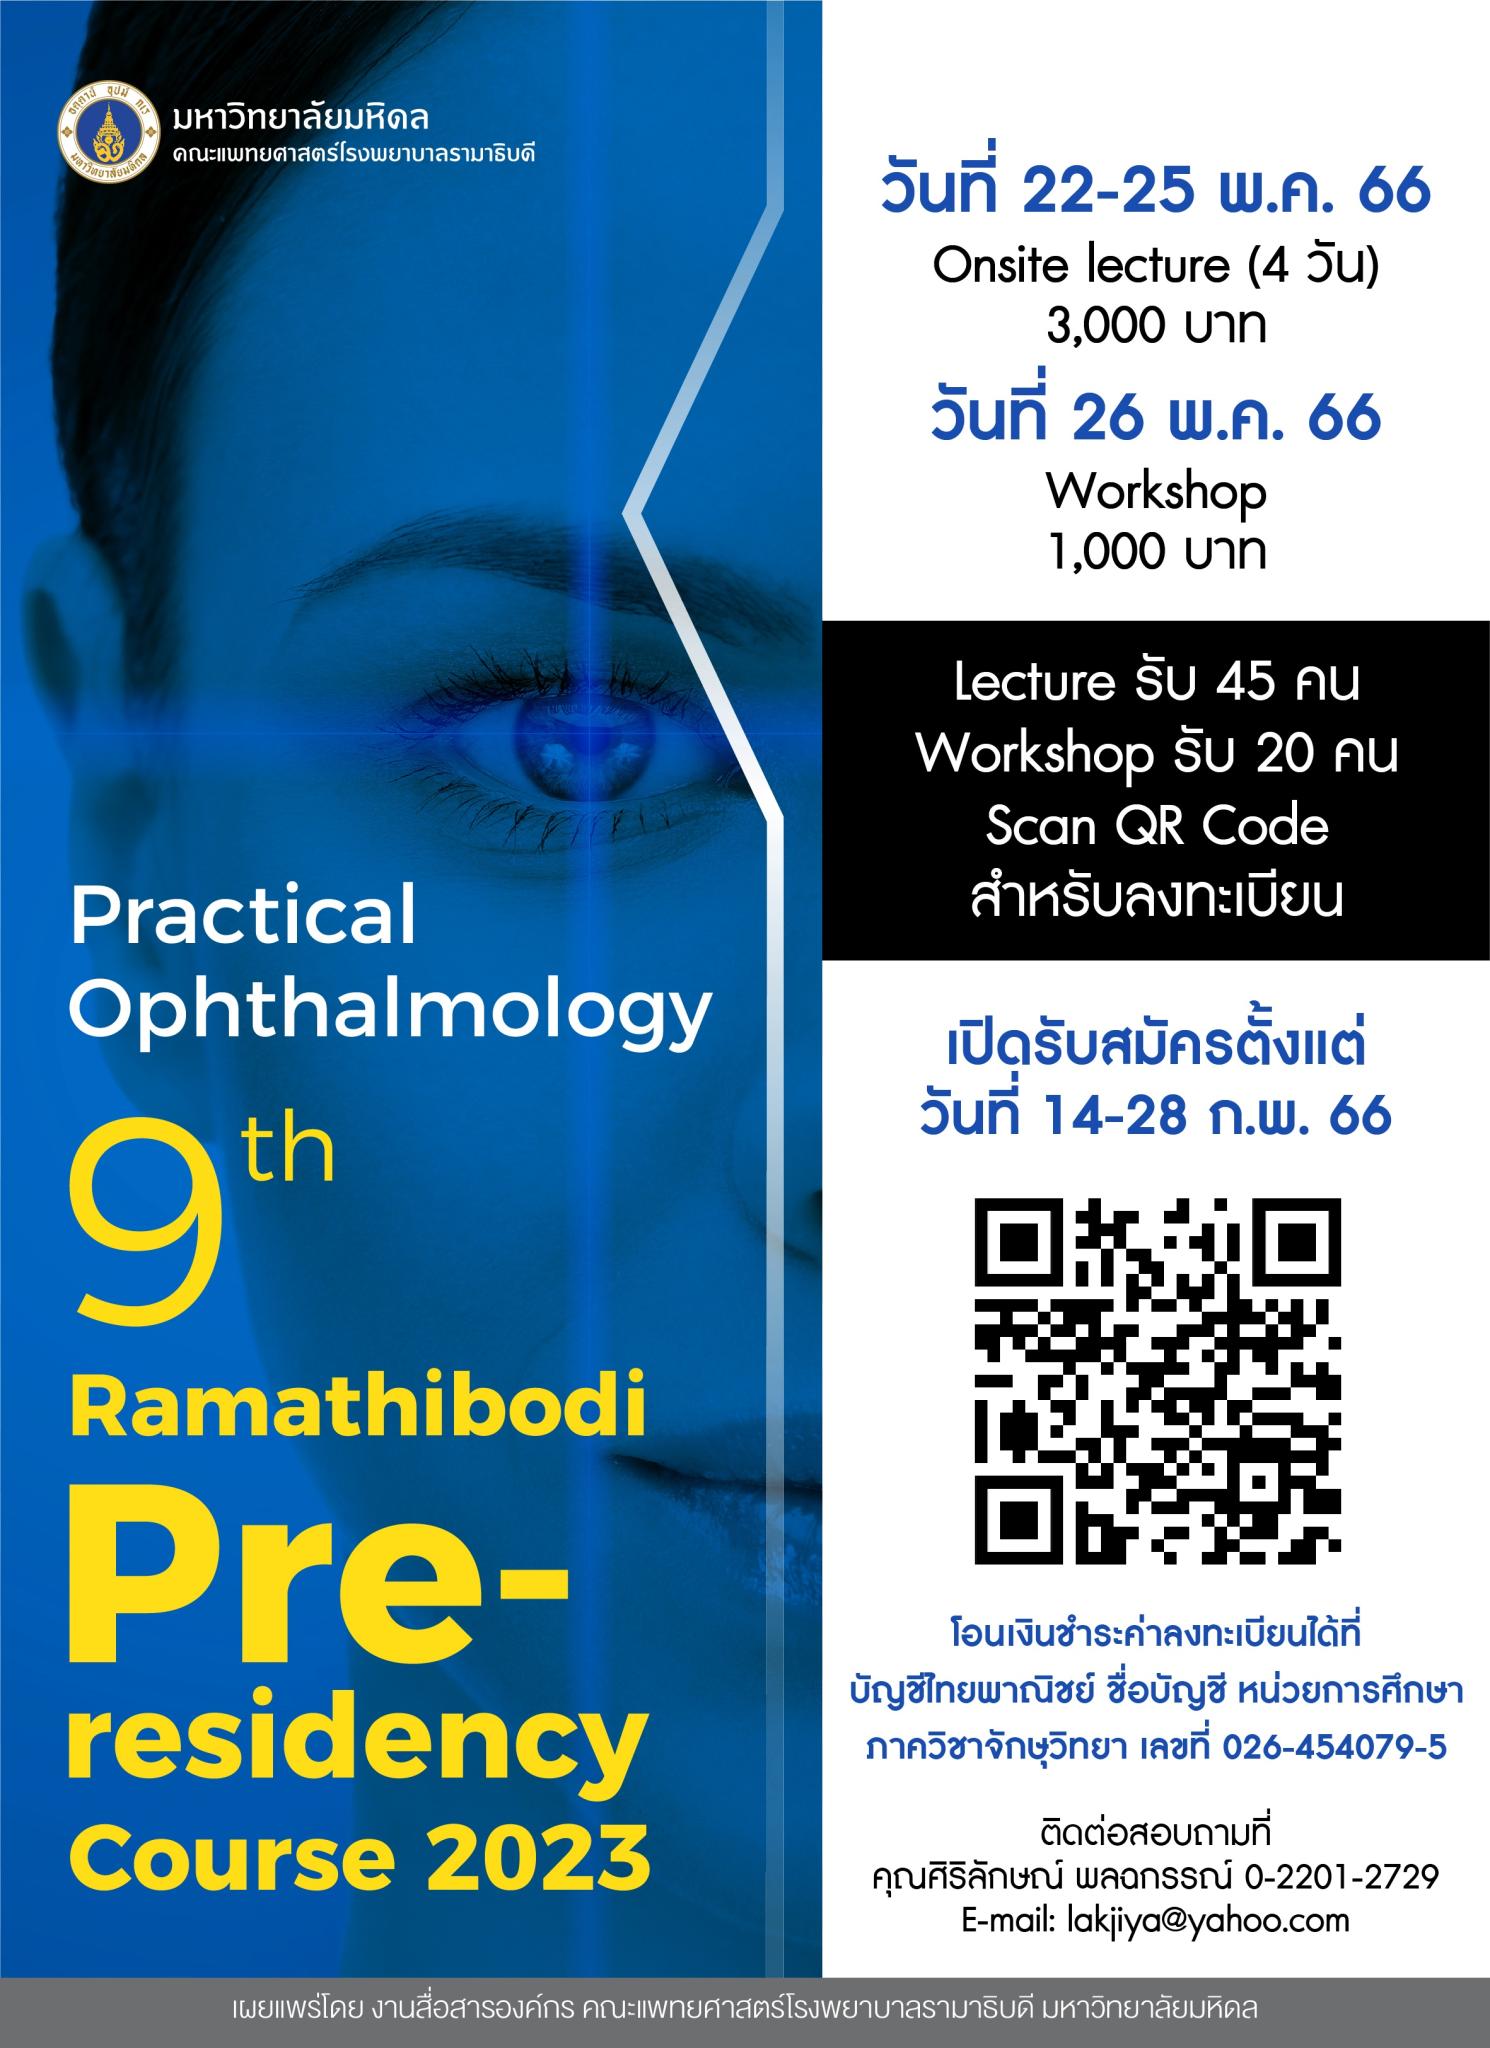 Practical Ophthalmology 9th Ramathibodi Pre-residency Course 2023